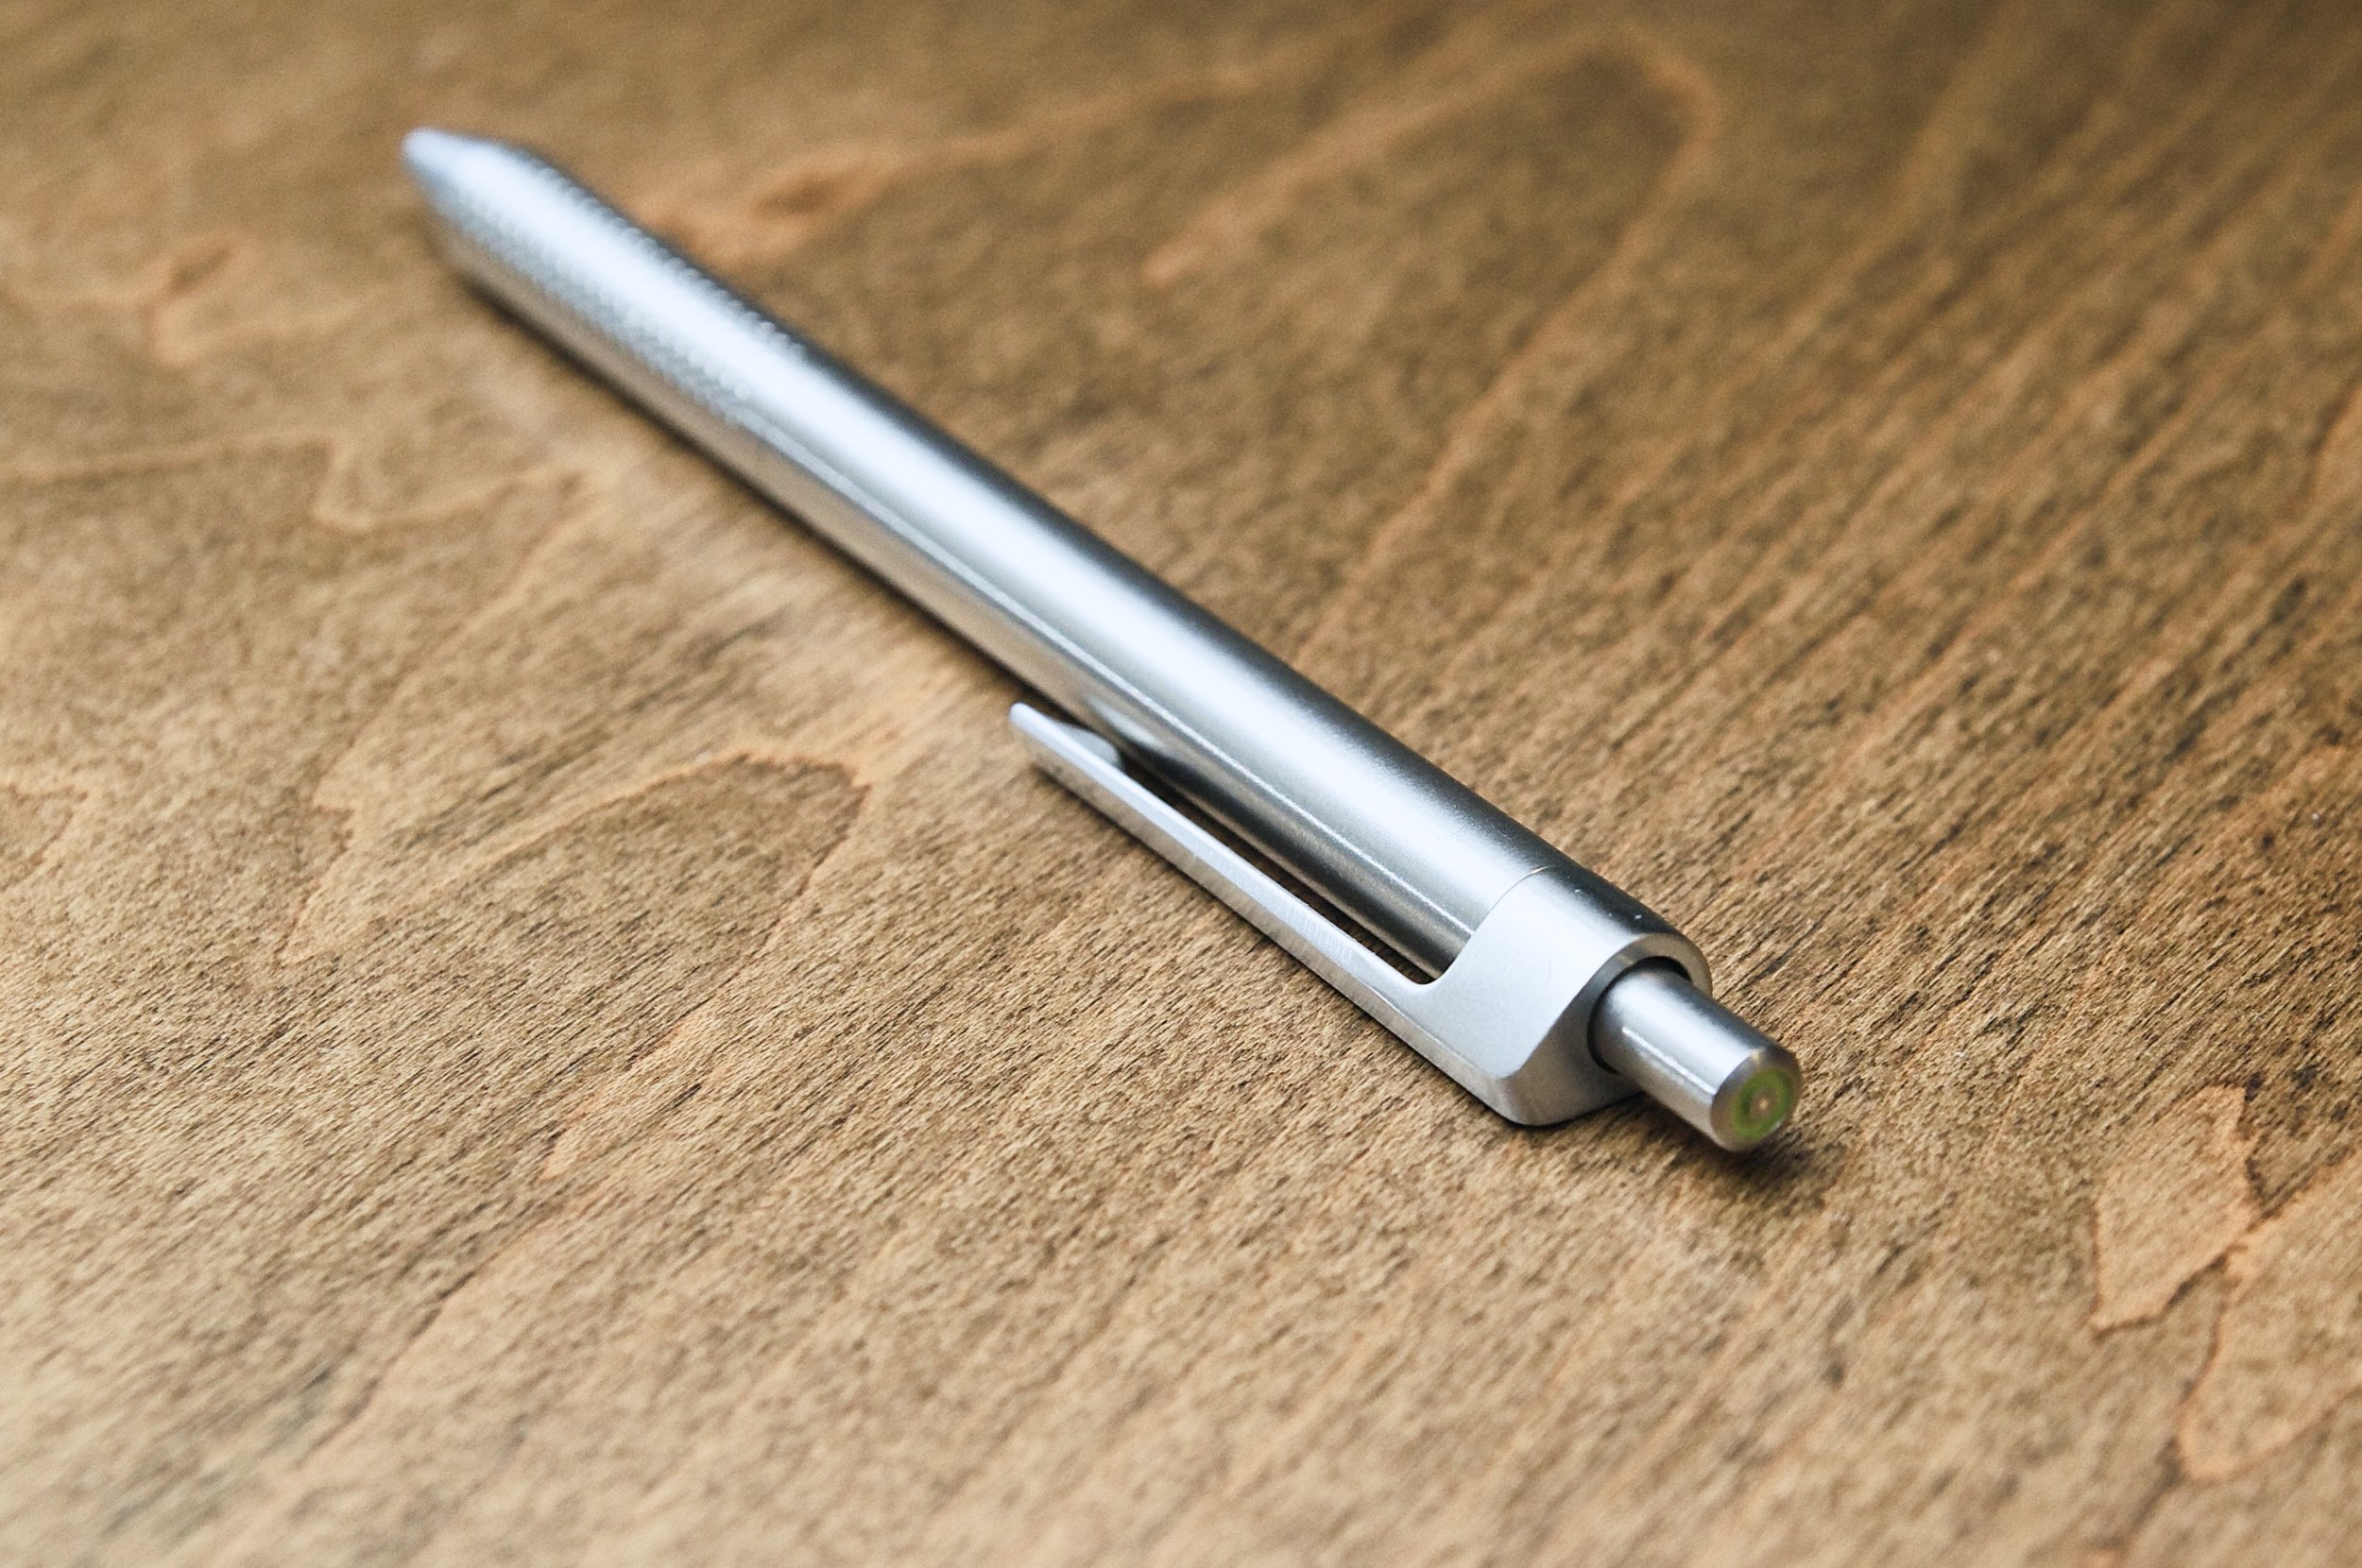 Bullet Journal “The Pen” Review — The Pen Addict